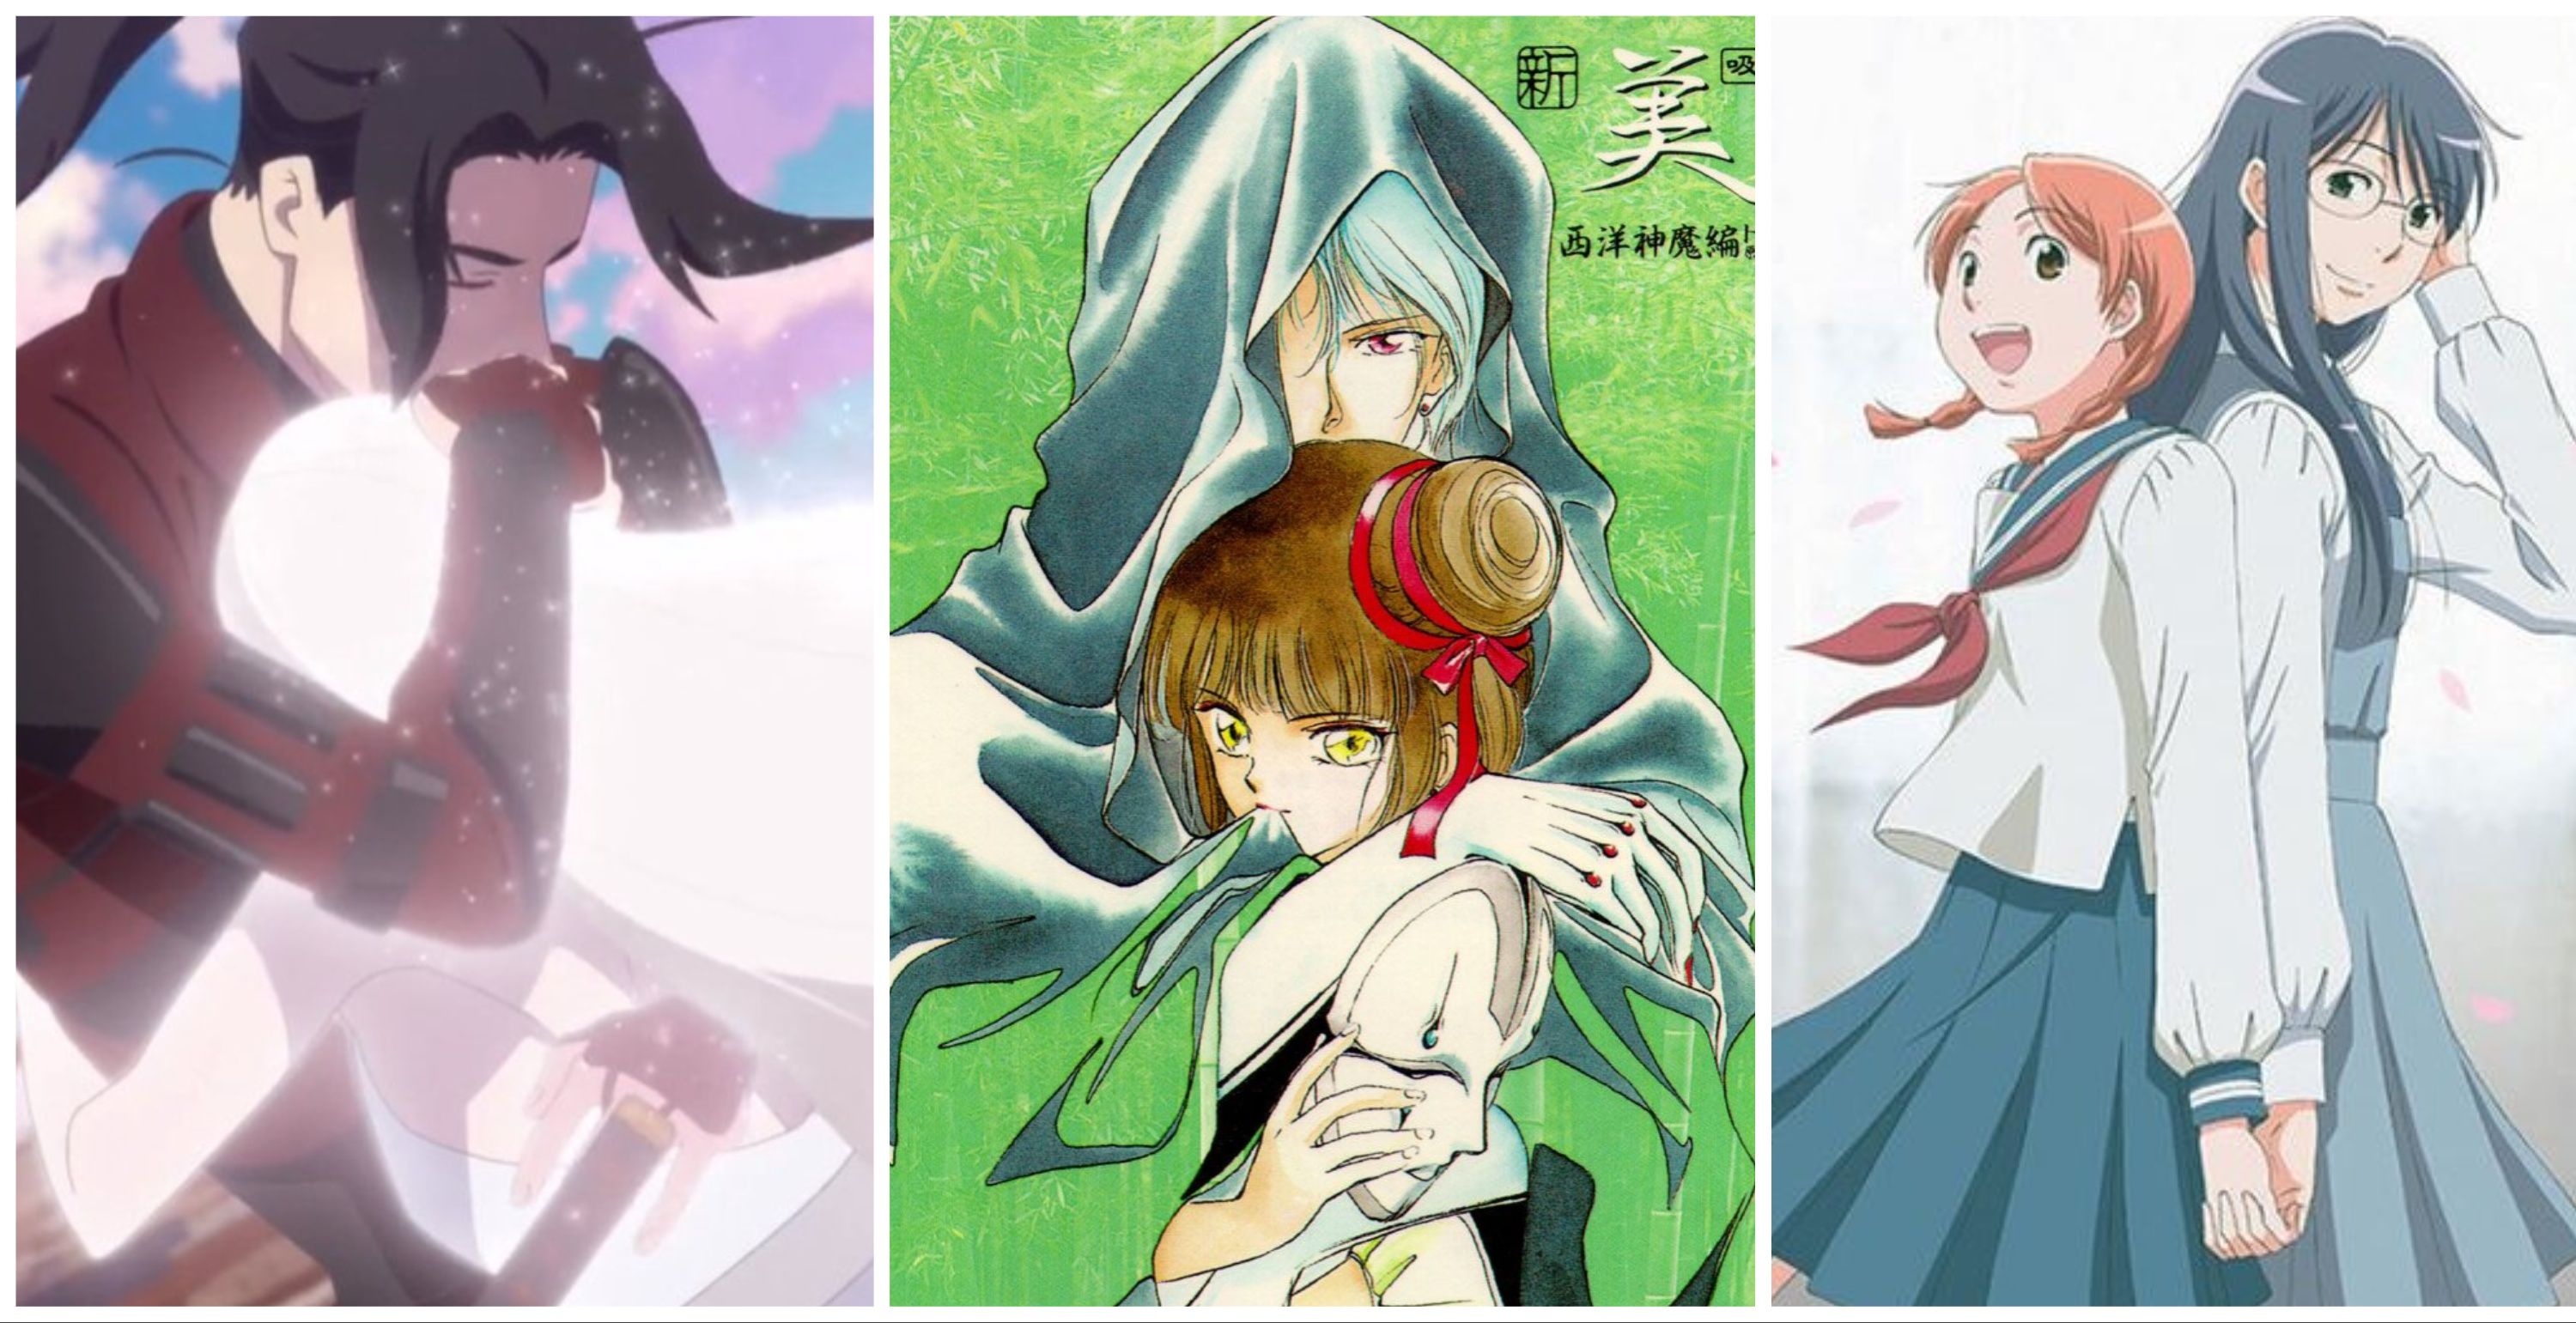 Split image, Yukimaru holding Fena in Fena Pirate Princess, Larva holding Miyu in Vampire Princess Miyu, and Akira and Fumi in Sweet Blue Flowers